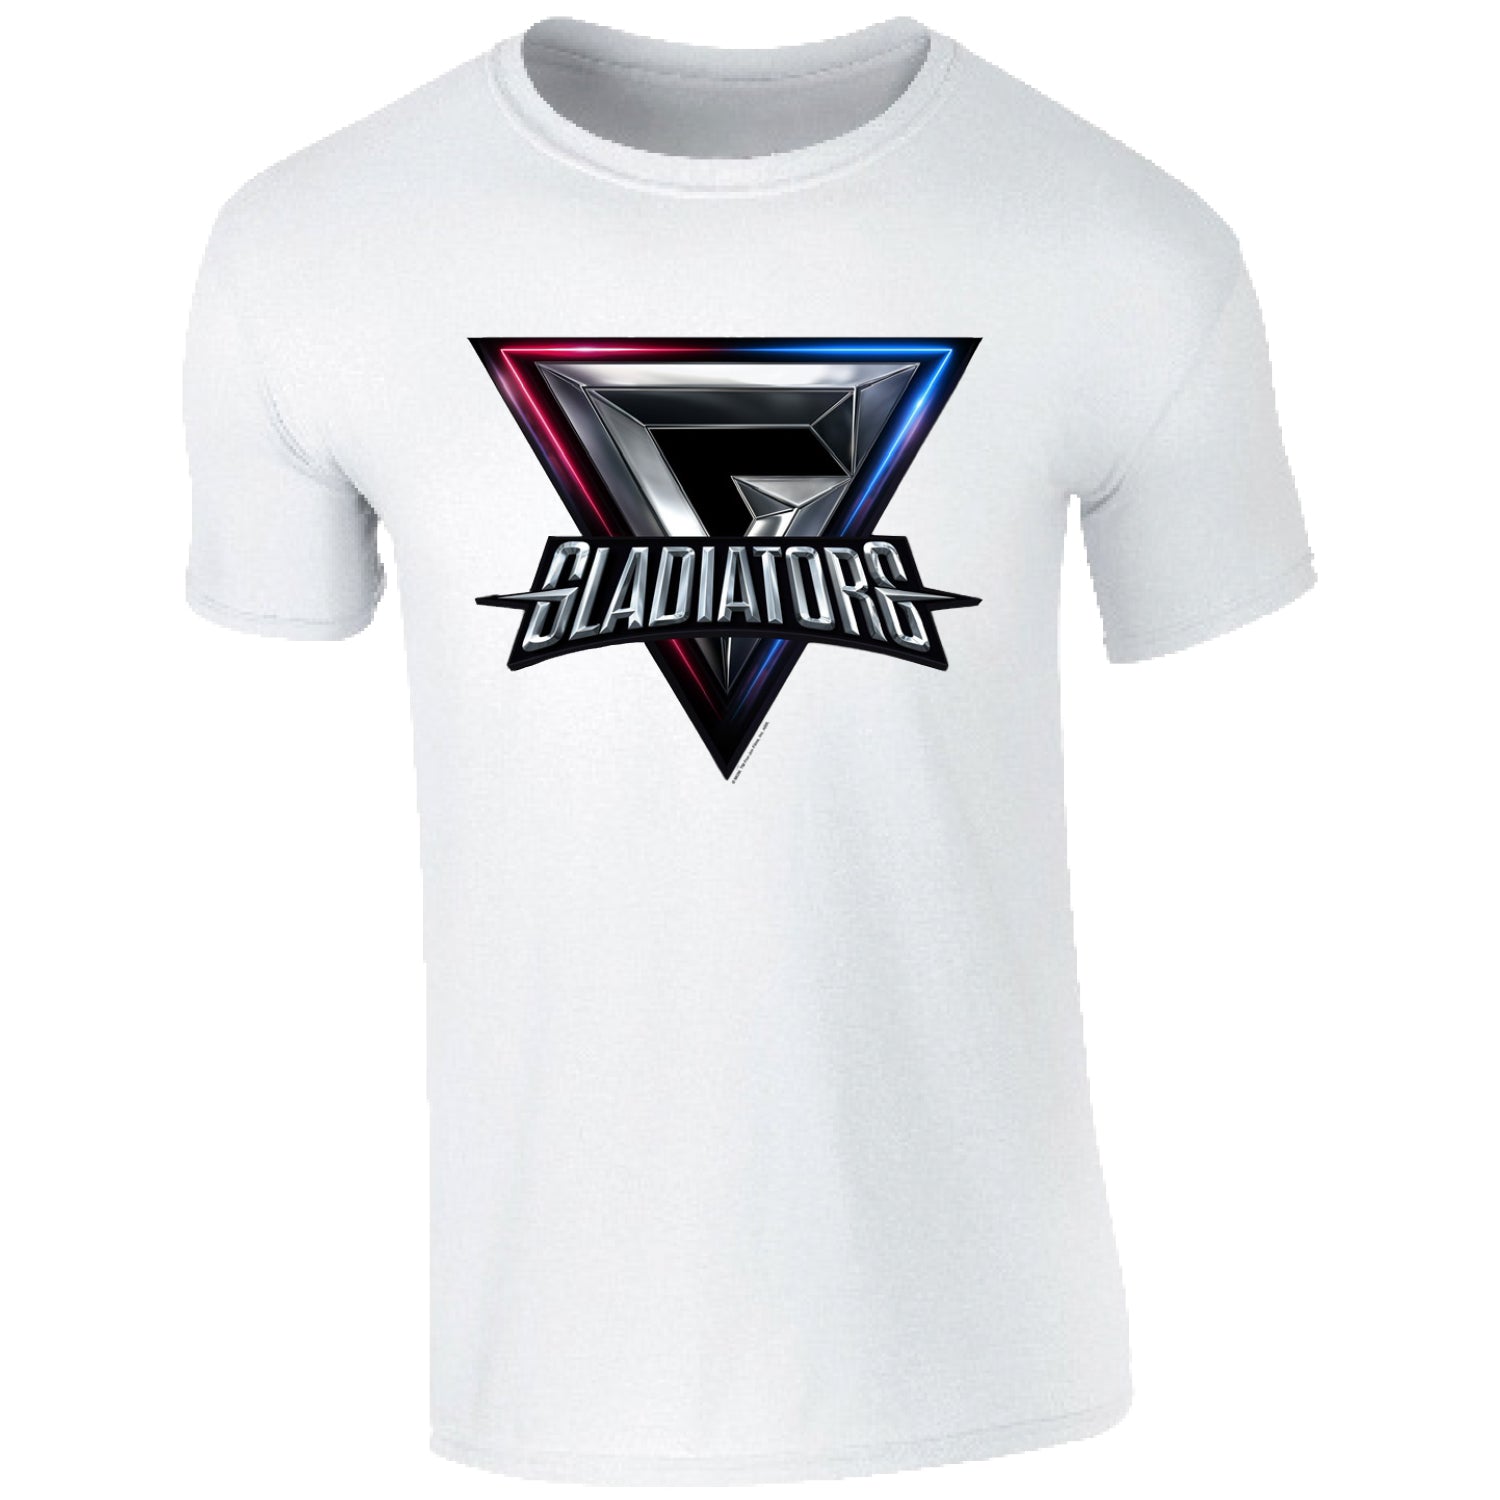 Gladiators Logo Official Men's T-shirt